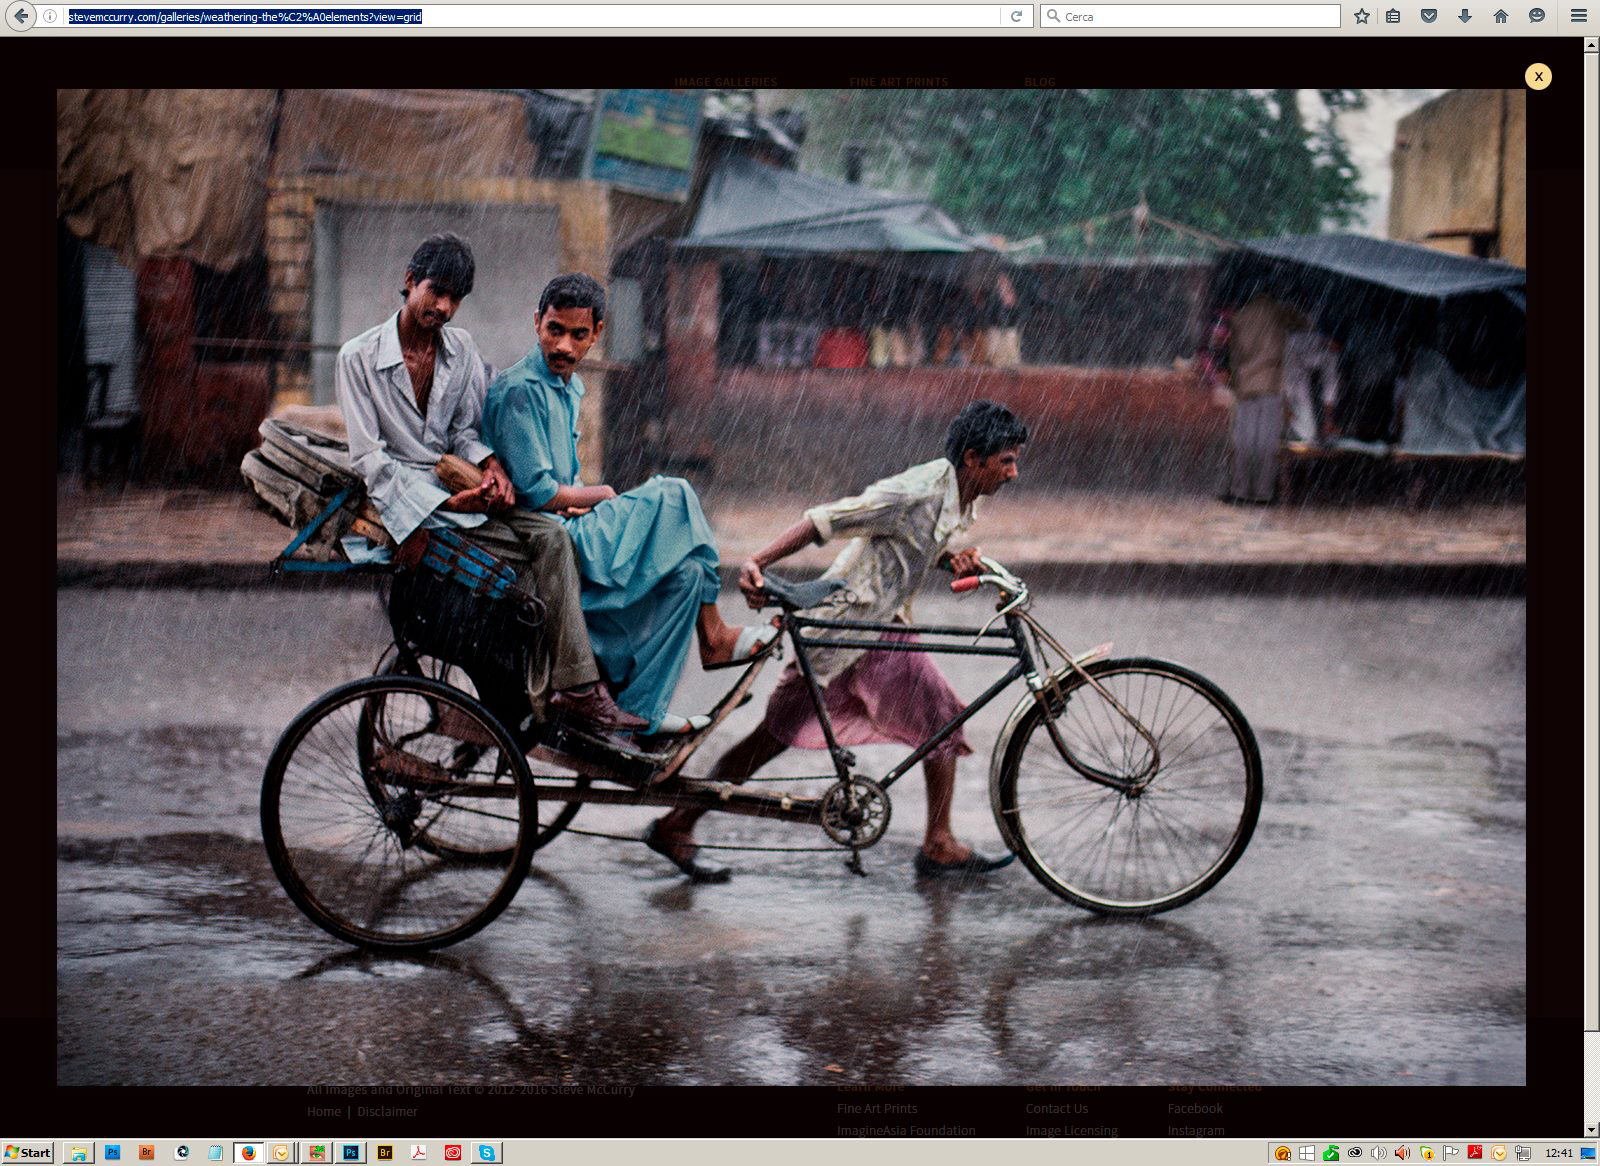 Locals riding a rickshaw through heavy monsoon rain. Steve McCurry retouched photo. Varanasi, India. 1983